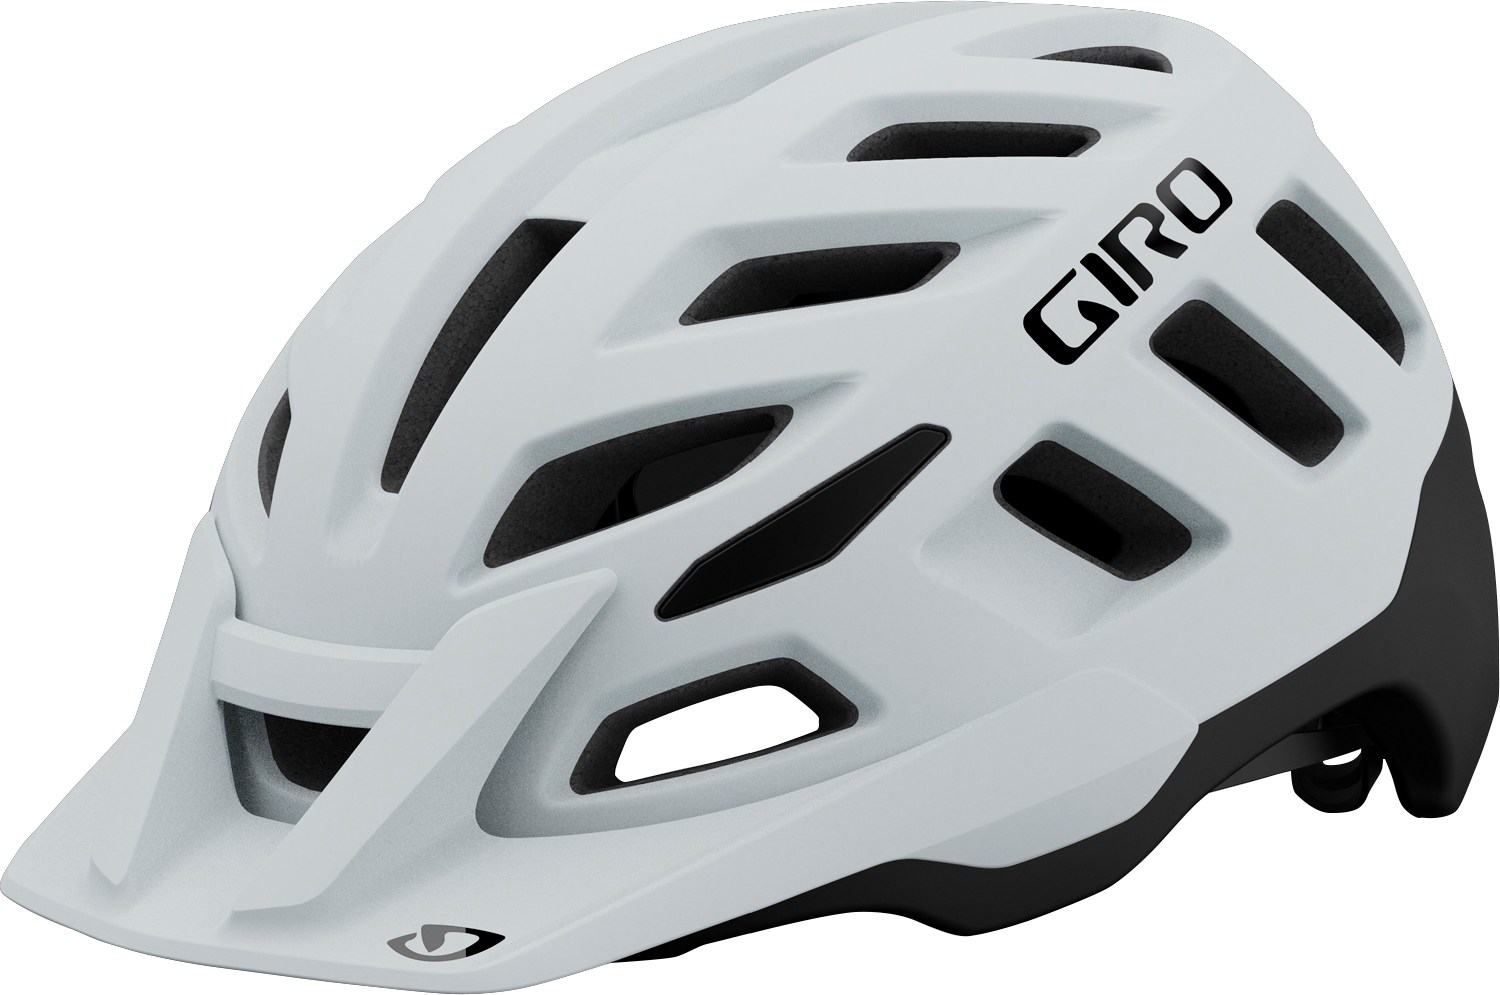 Велосипедный шлем Radix MIPS Giro, белый prepared rehmannia shu di huang radix rehmanniae praeparata